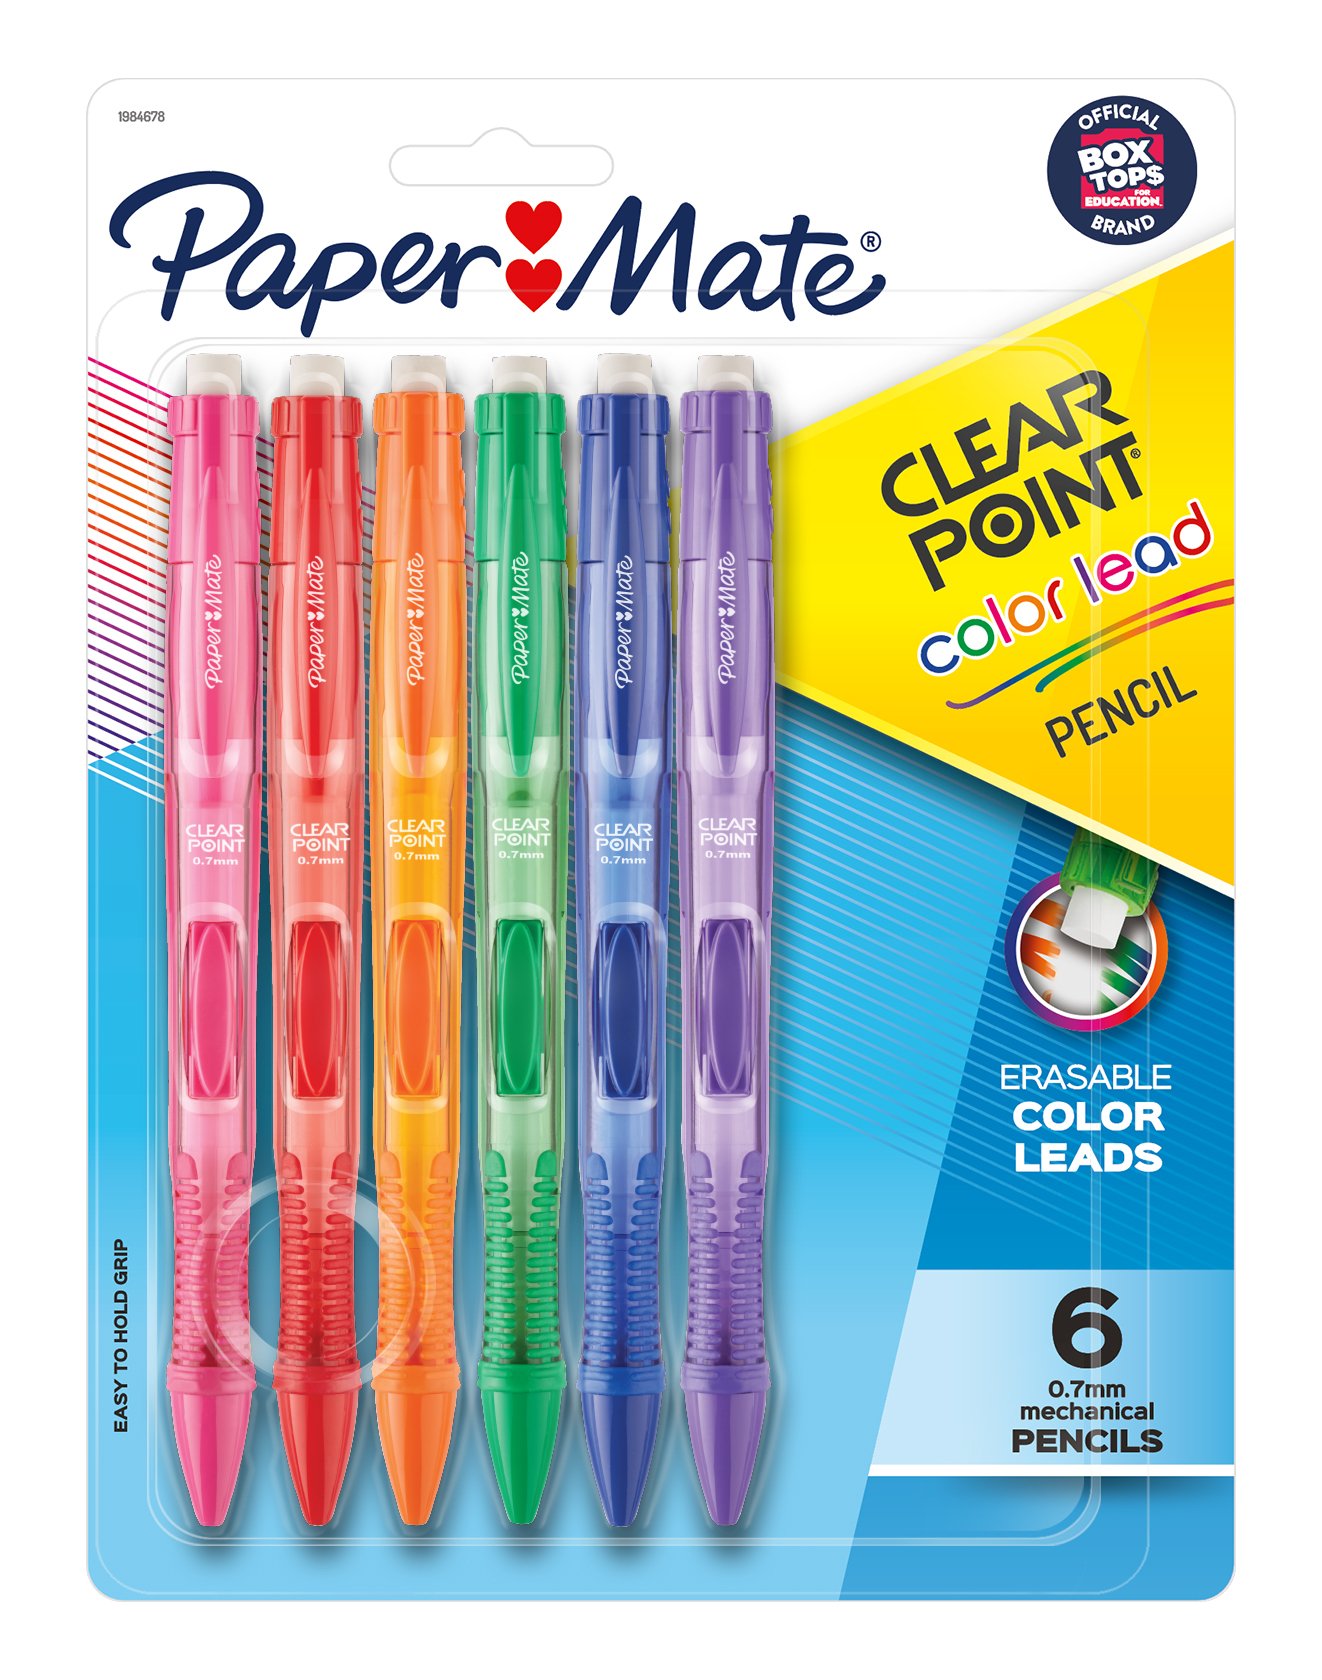 Marketing Color Change Pencils